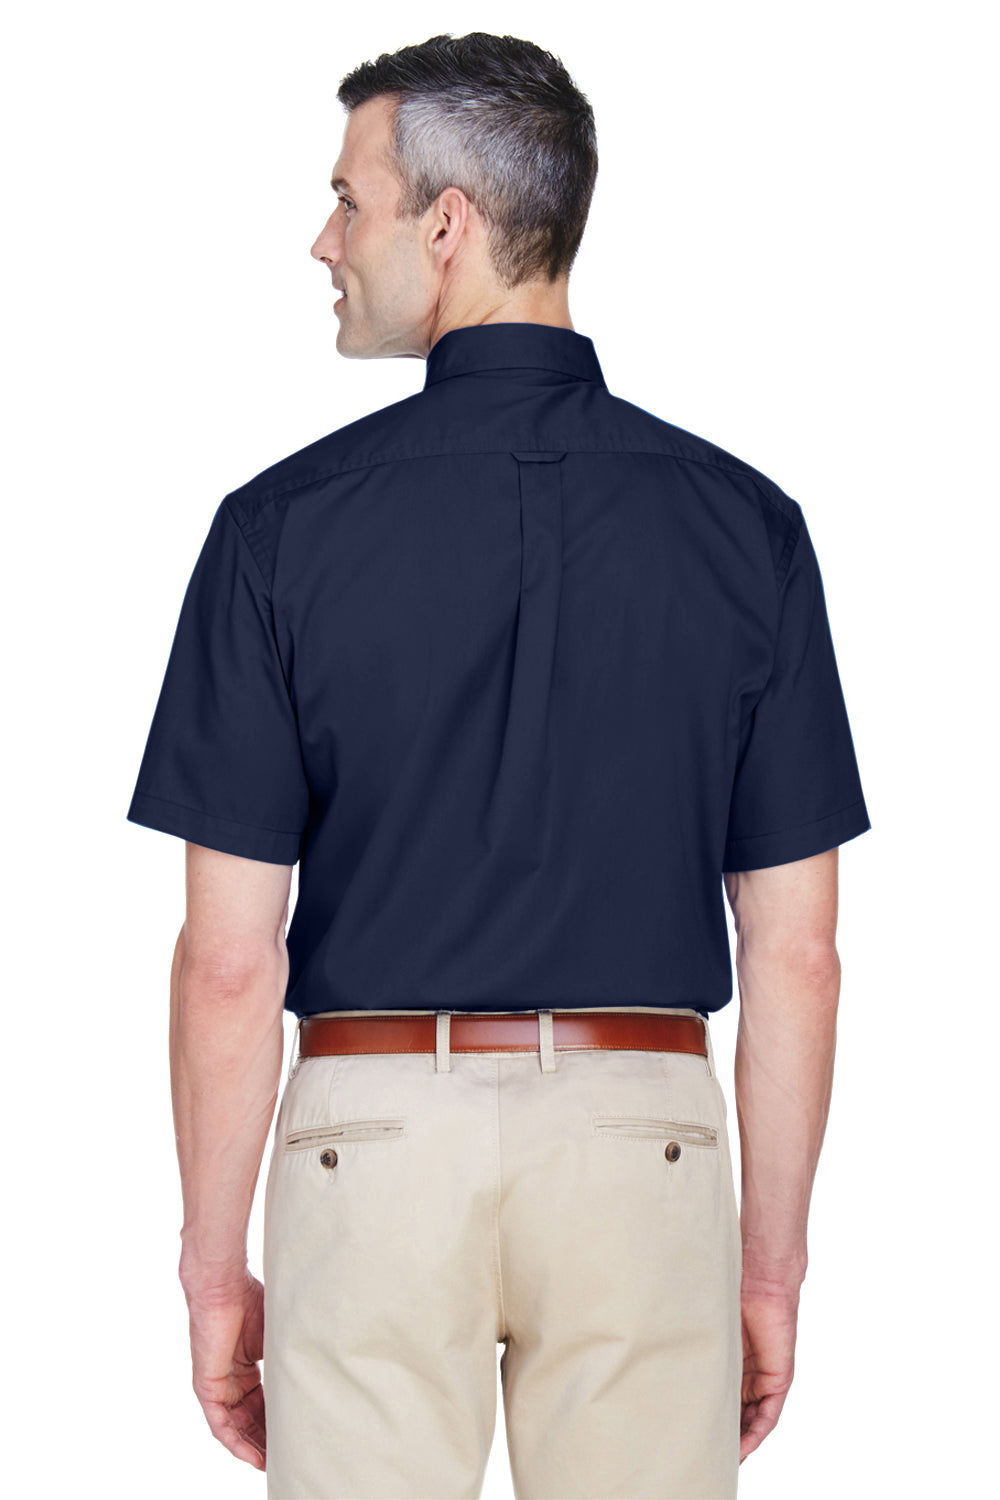 Harriton M500S Mens Wrinkle Resistant Short Sleeve Button Down Shirt w/ Pocket Navy Blue Back